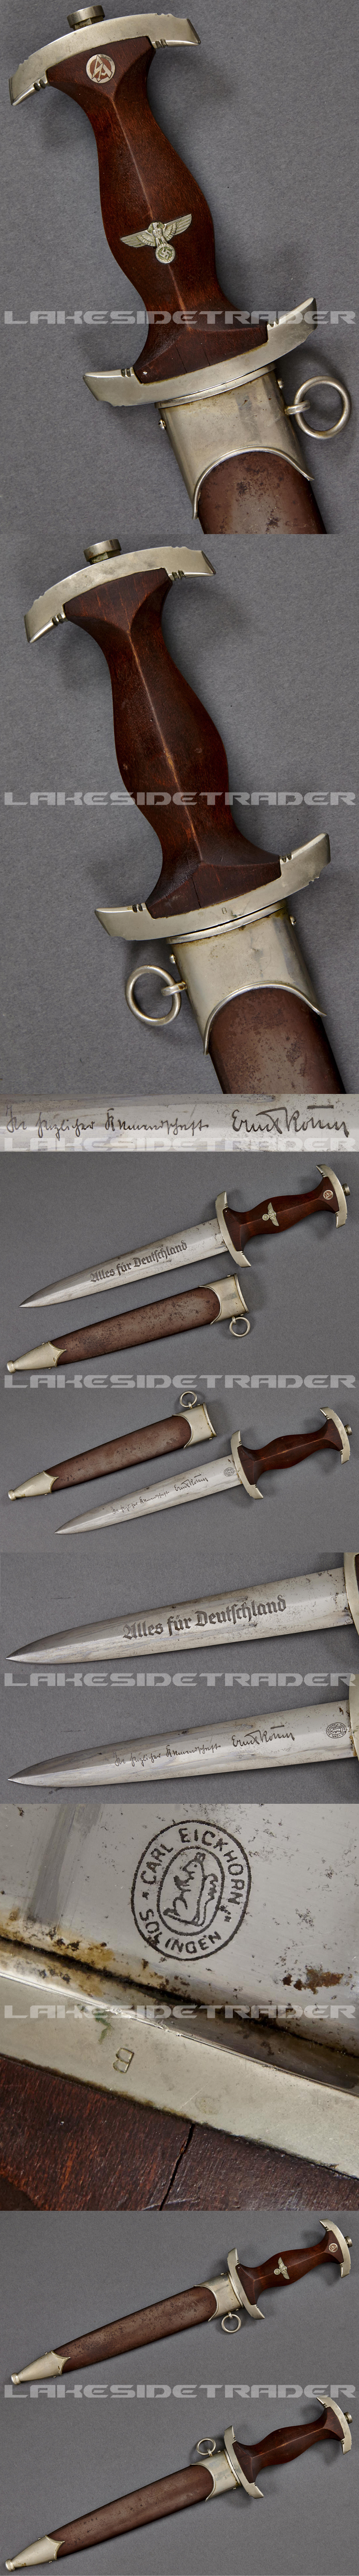 A model 1934 SA honour dagger with R?hm dedication